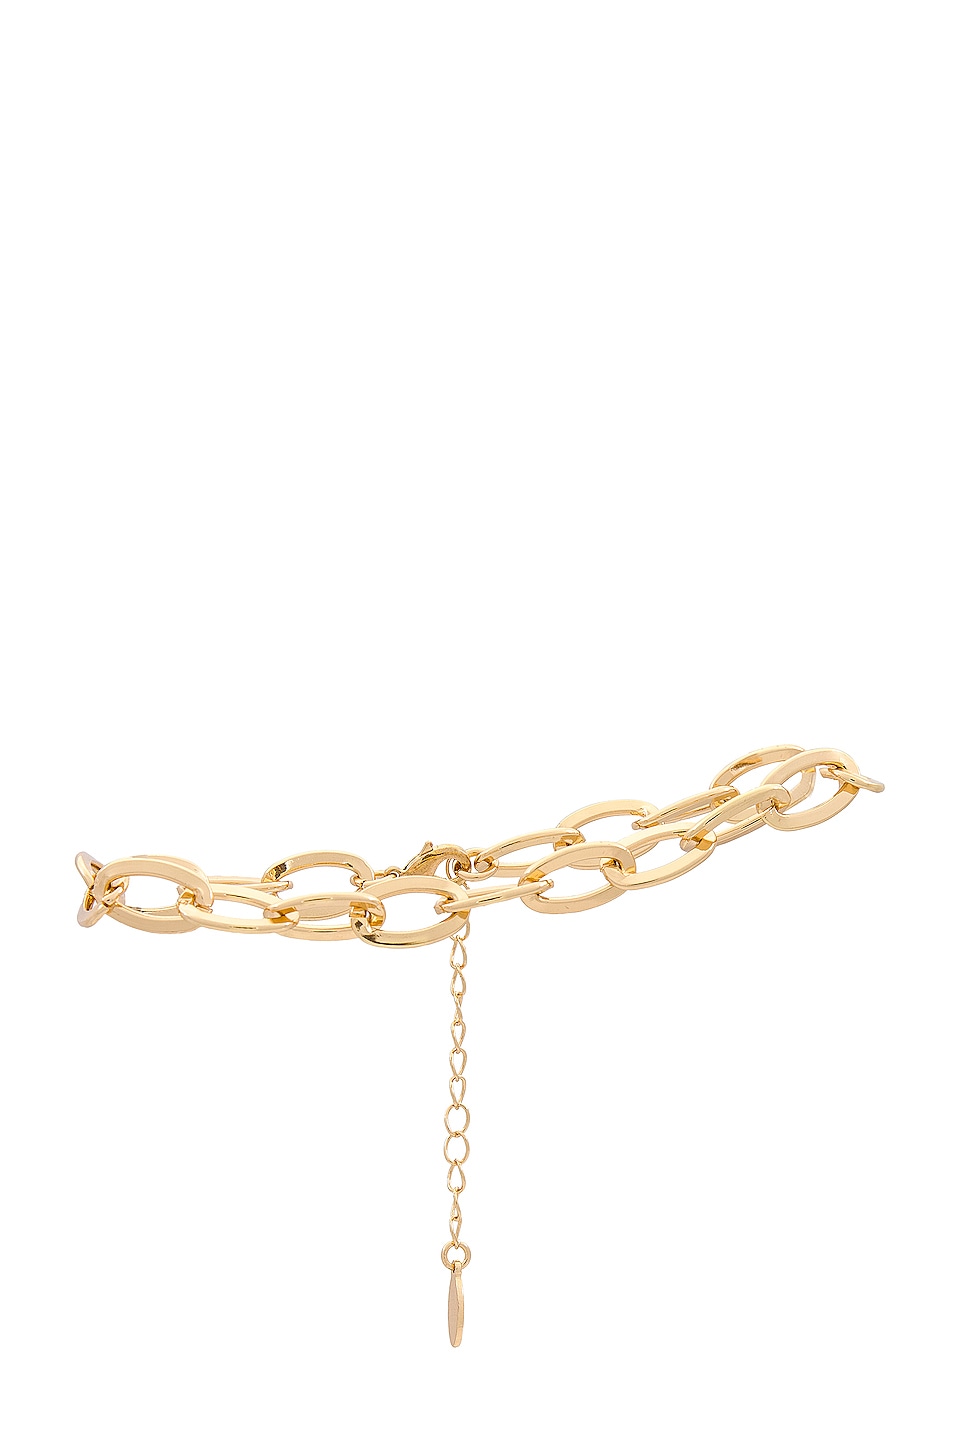 Revolve Women Accessories Jewelry Body Jewelry Reyes Anklet in Metallic Gold. 